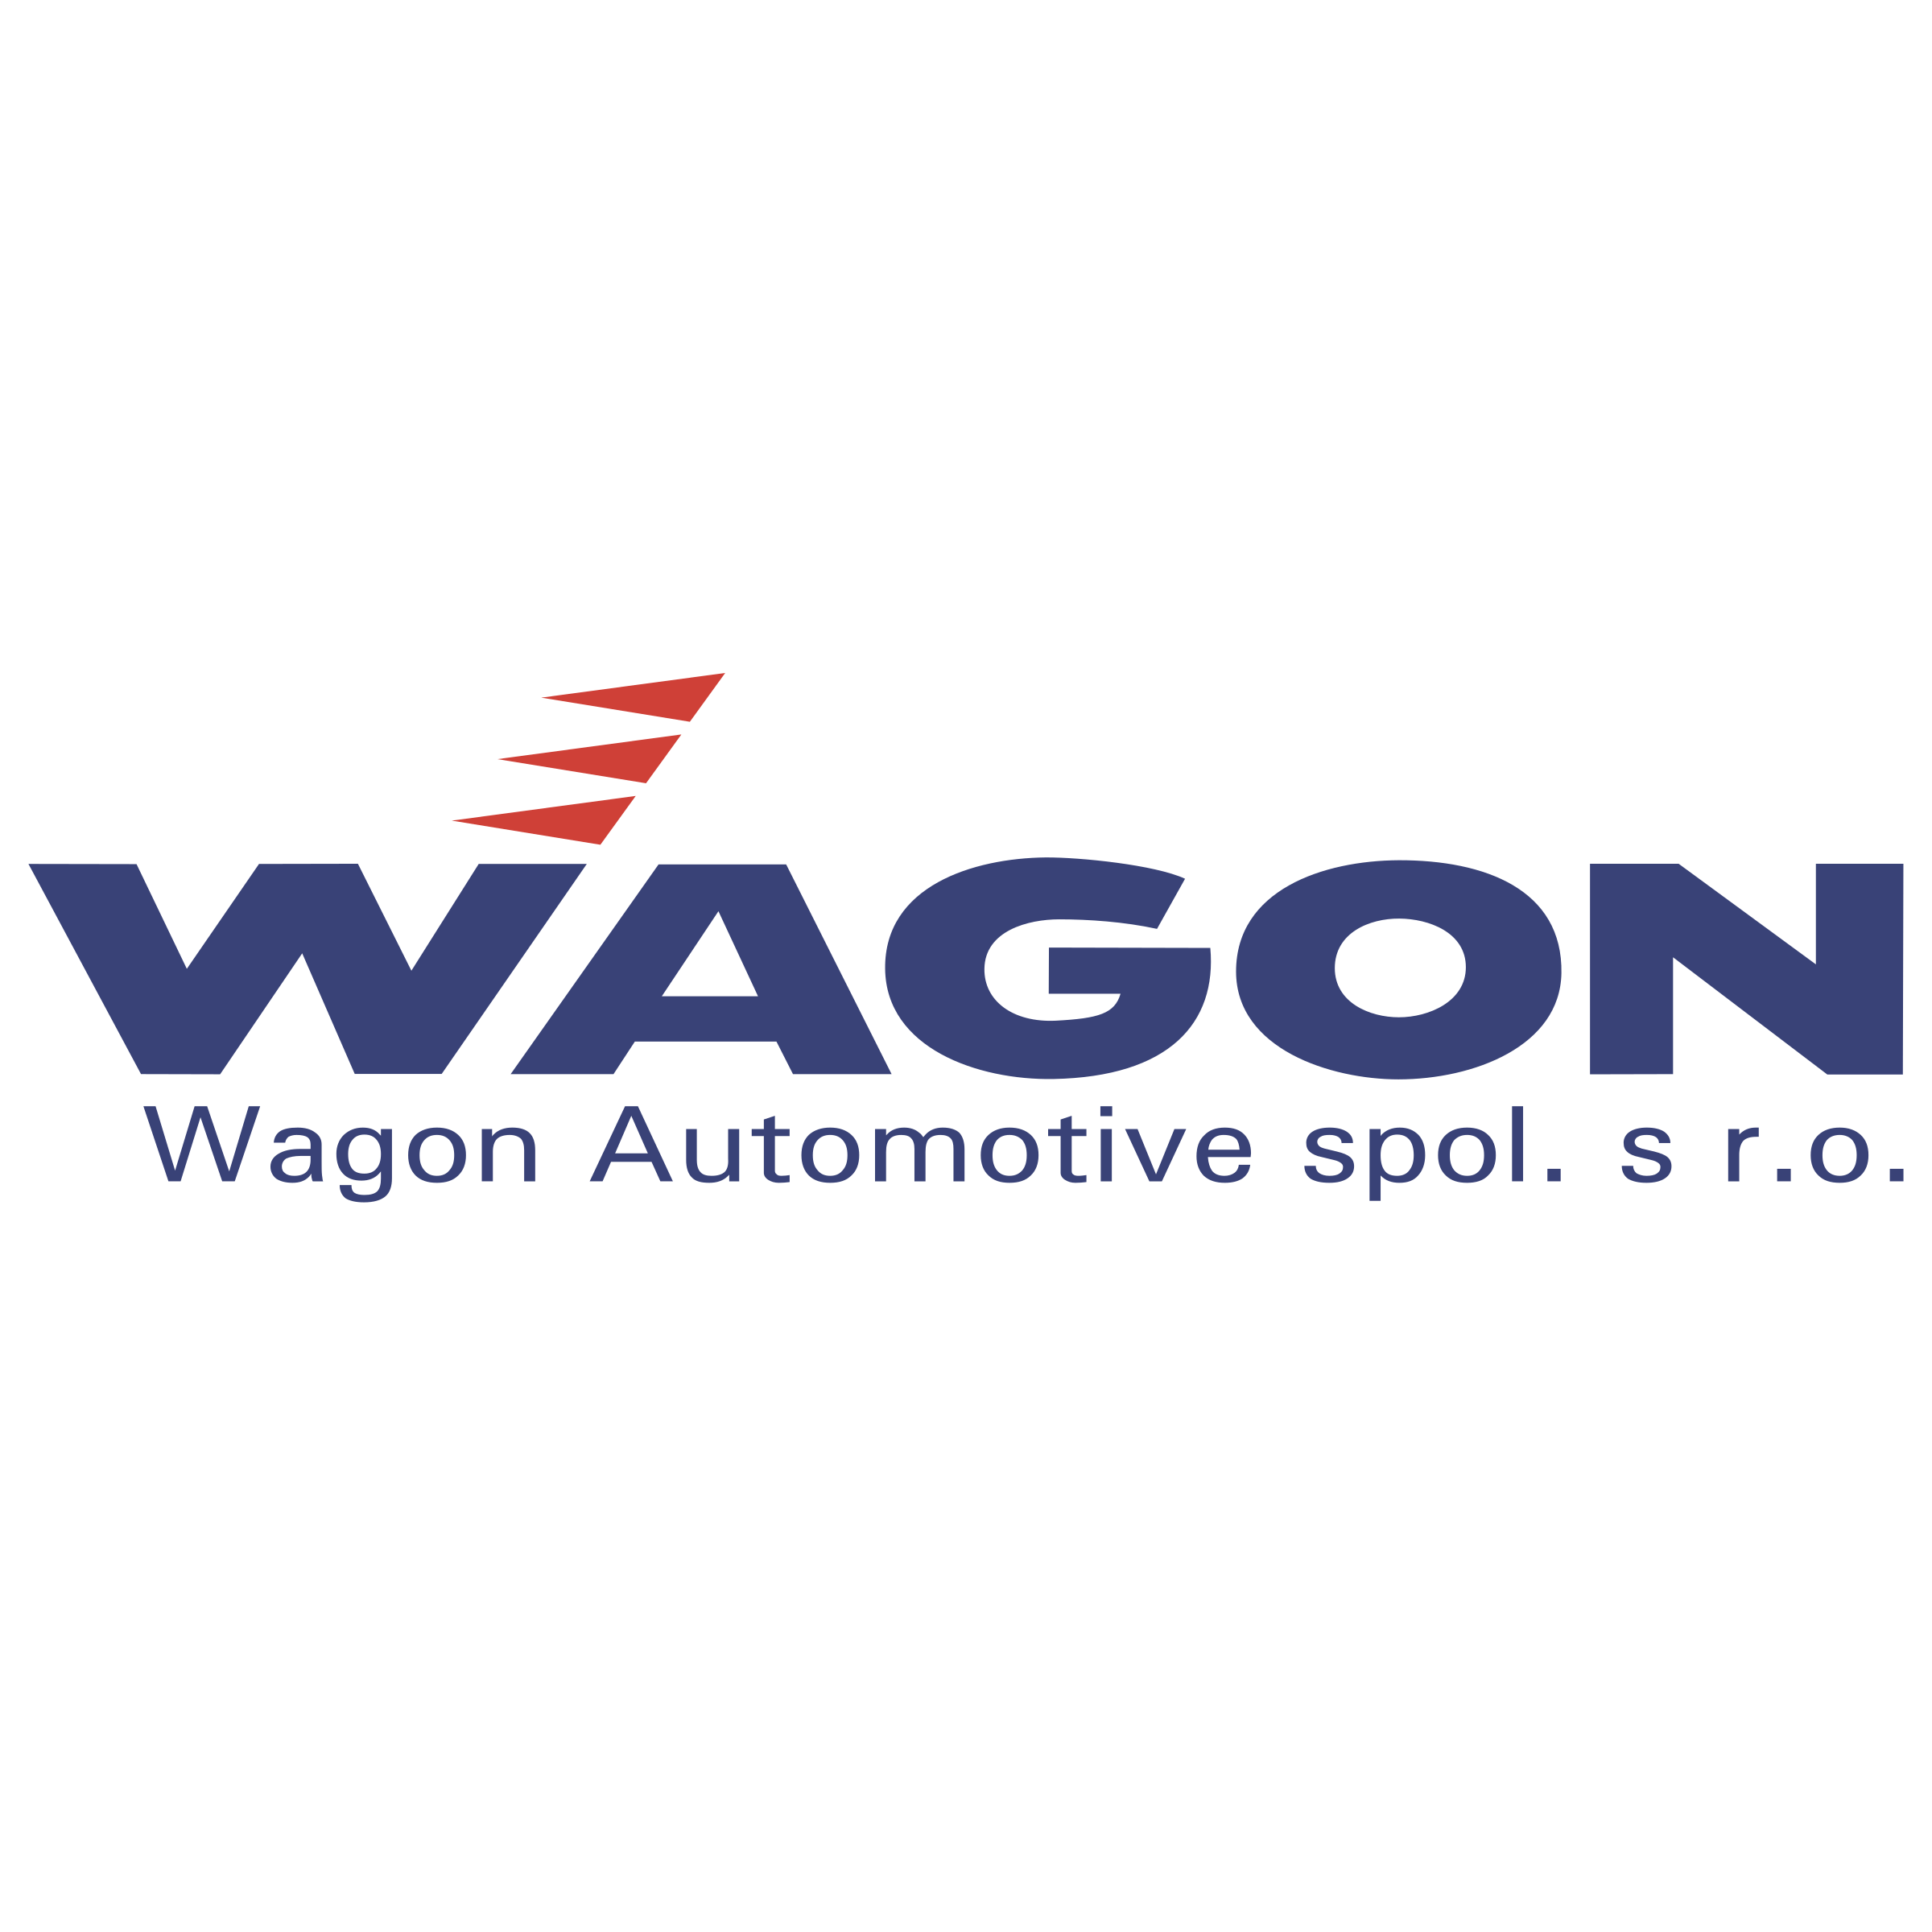 Wagon Logo - Wagon Logo PNG Transparent & SVG Vector